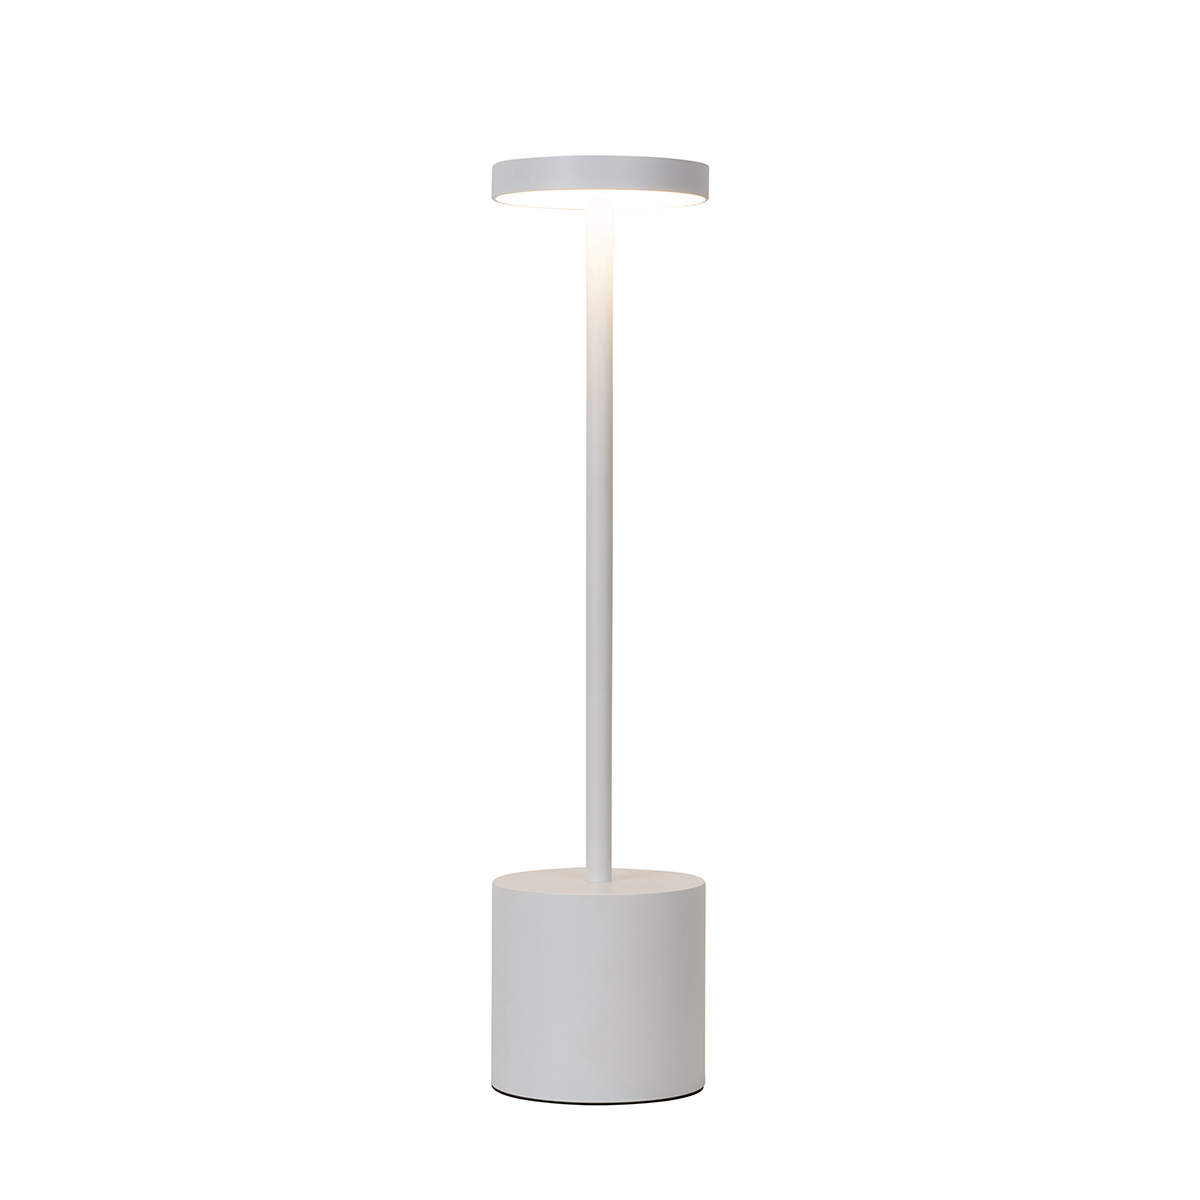 Buiten tafellamp wit incl. LED en dimmer oplaadbaar - Dupont